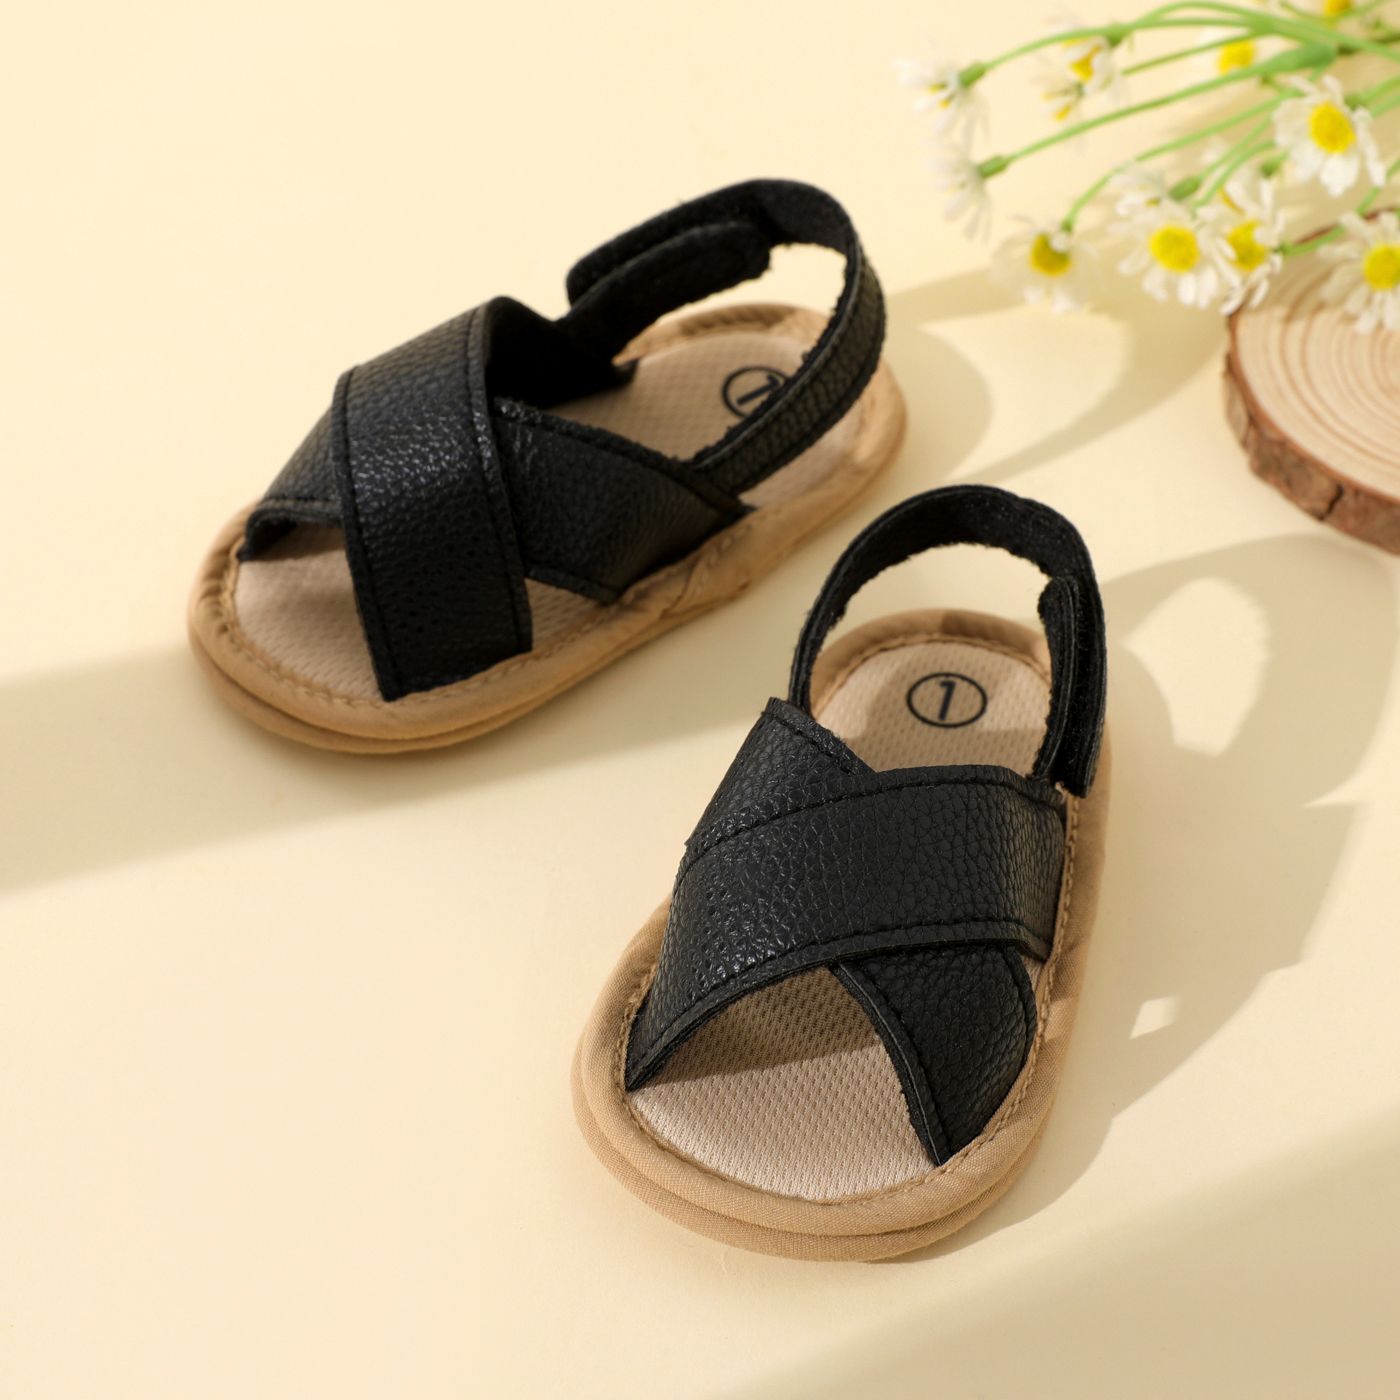 Baby / Toddler Crisscross Strap Slingback Open Toe Soft Sole Sandals Prewalker Shoes